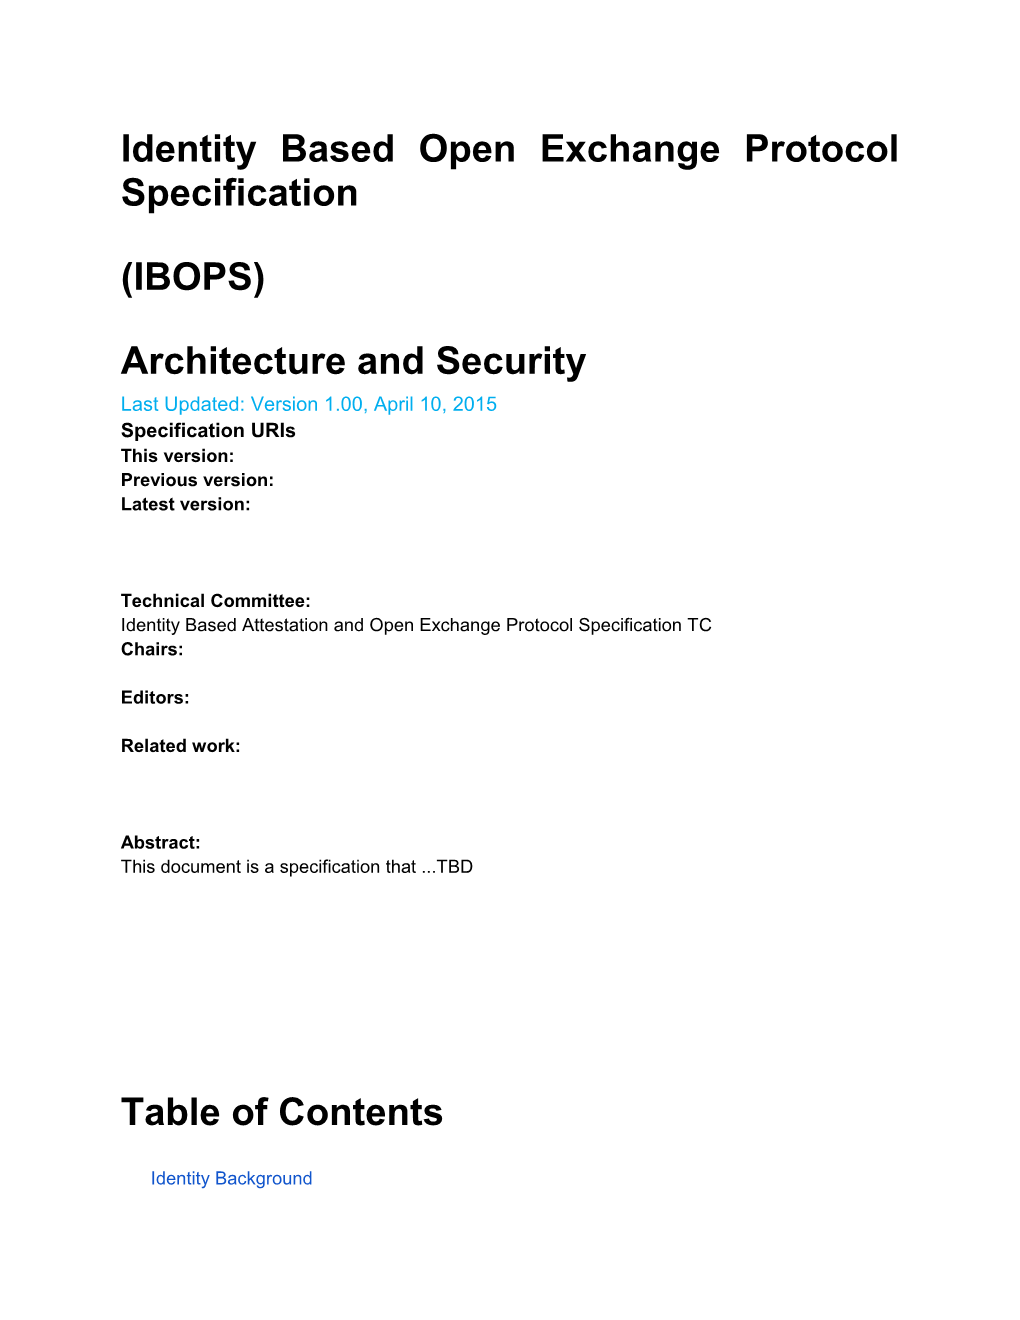 Identity Based Open Exchange Protocol Specification